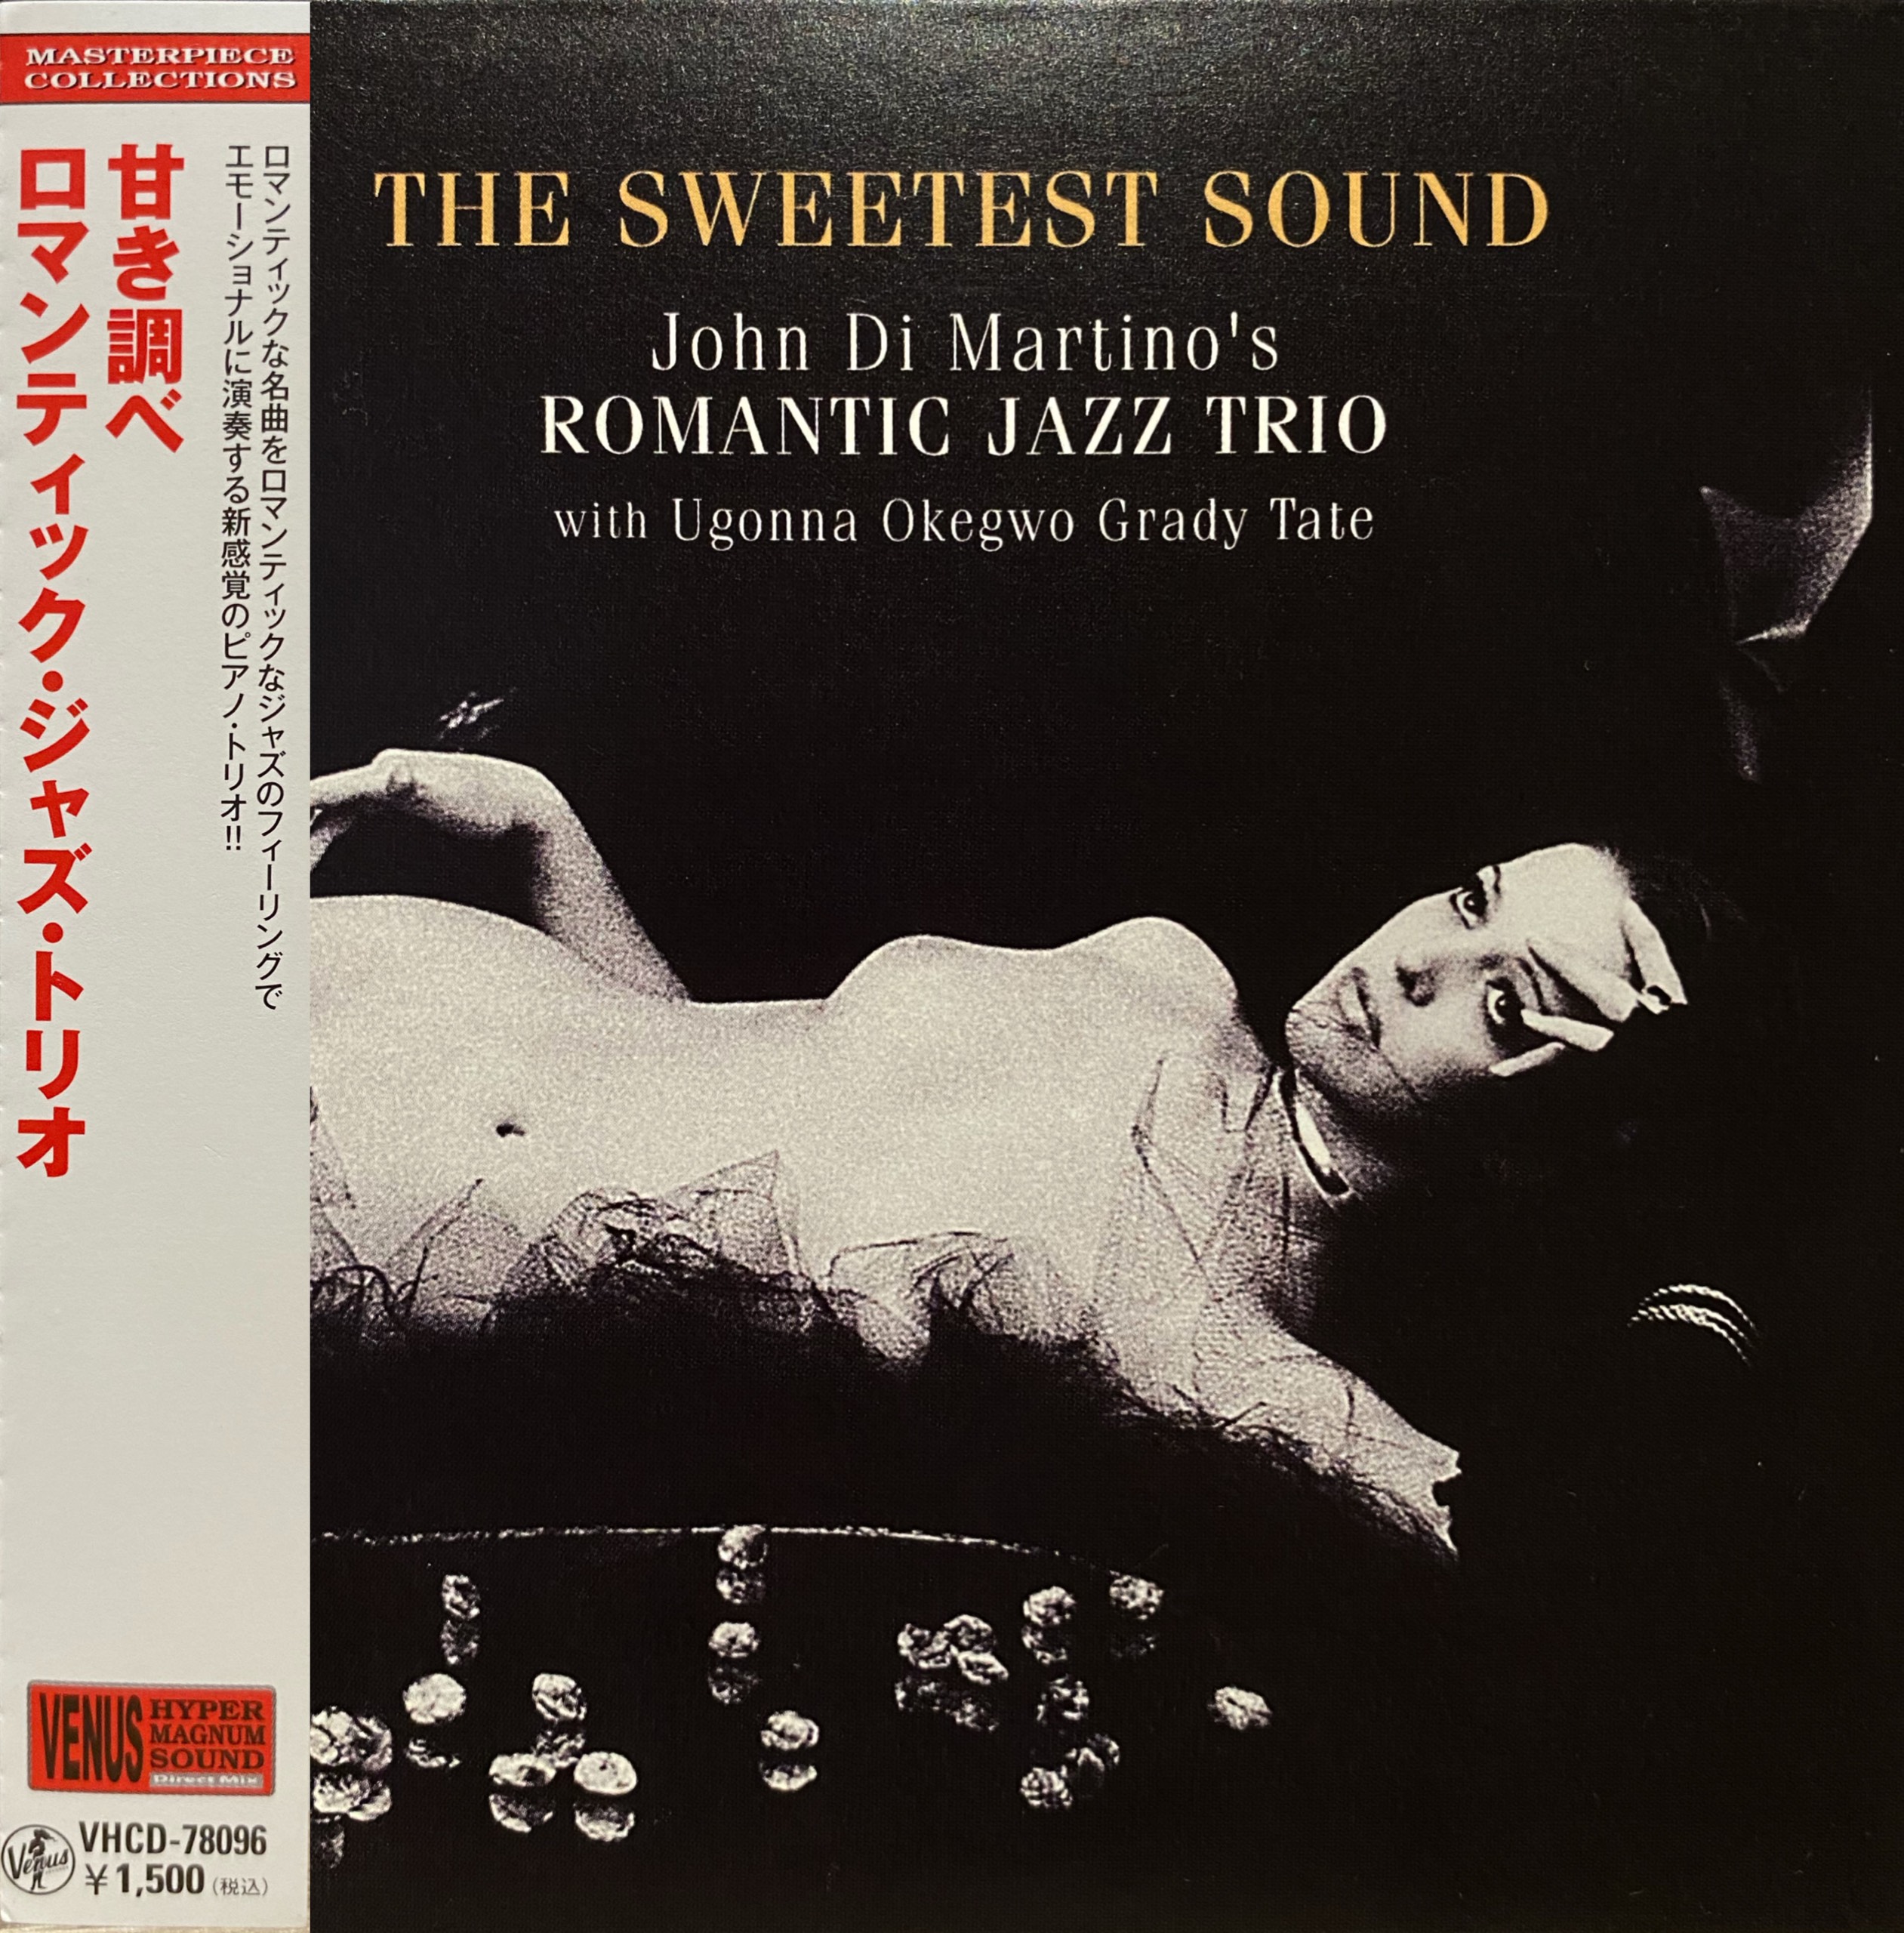 The Sweetest Sound - John Di Martino's Romantic Jazz Trio